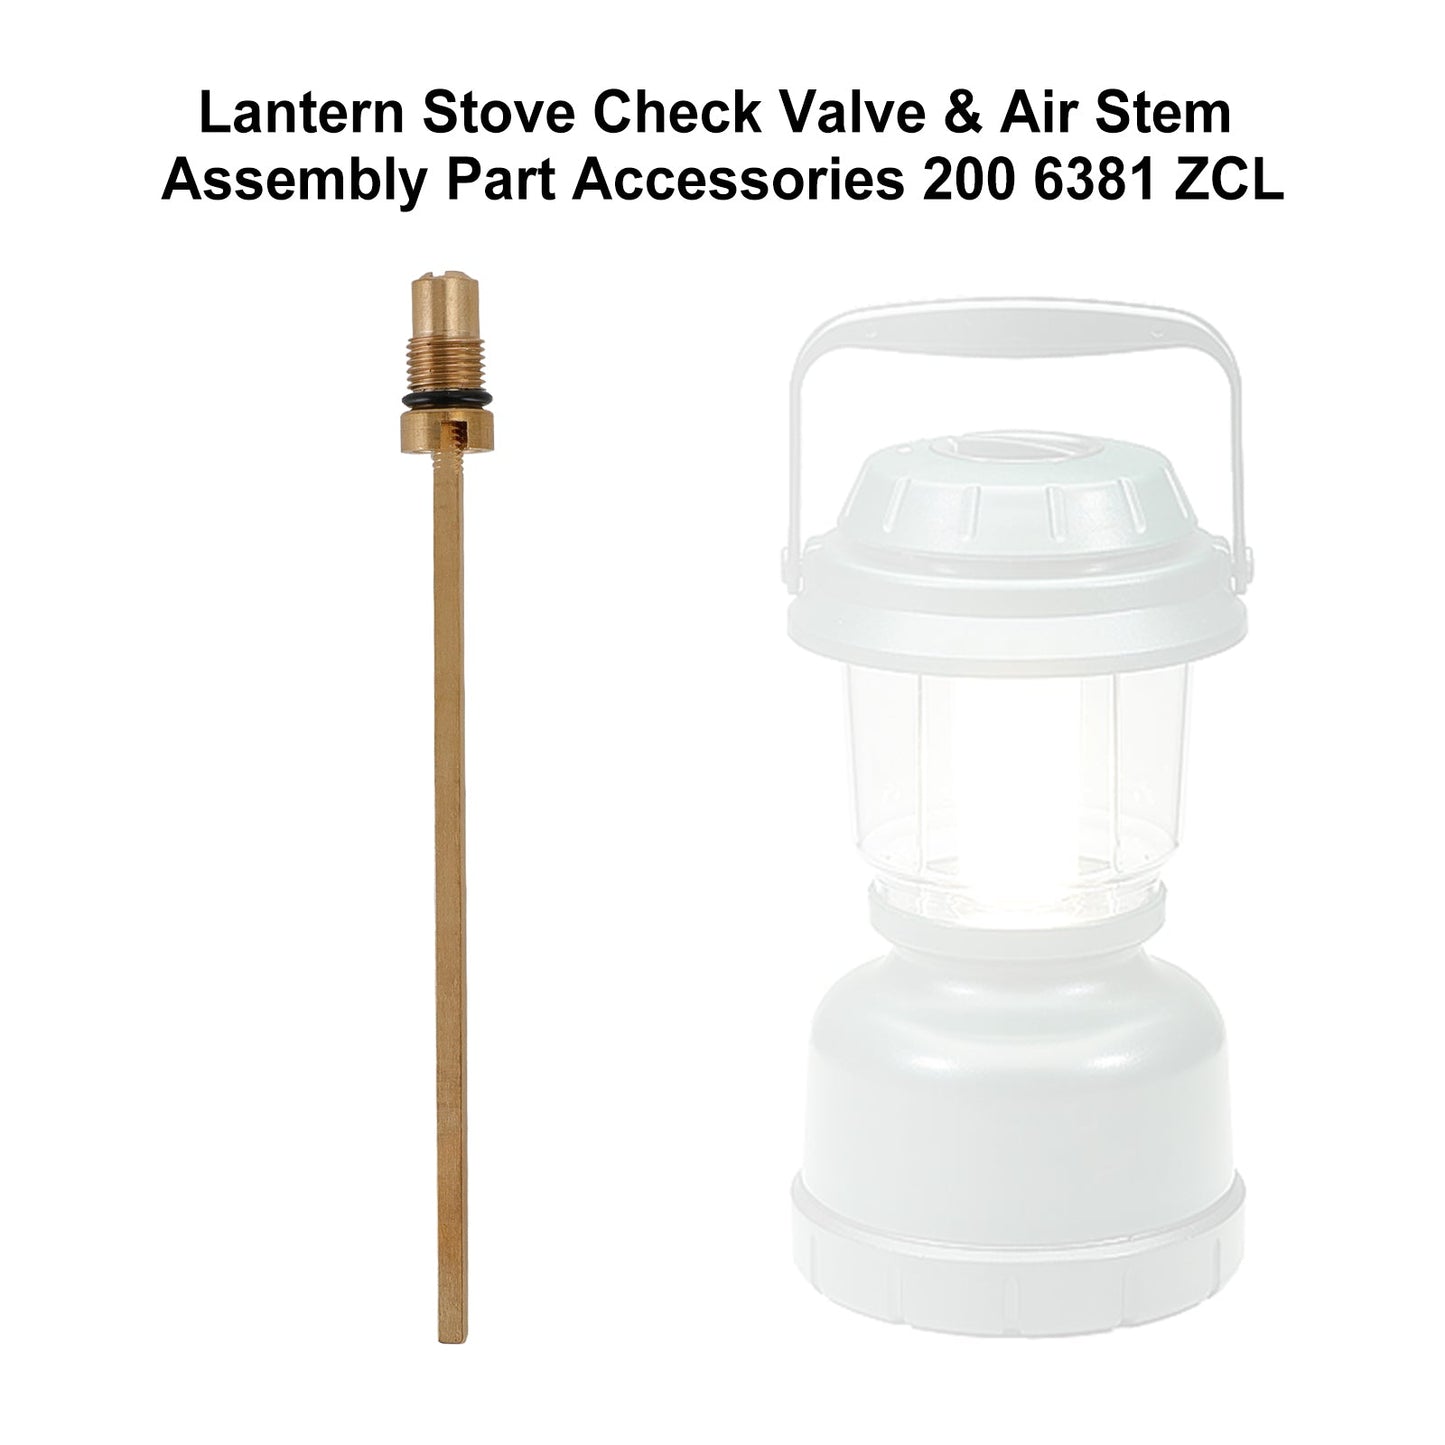 Lantern Stove Check Valve & Air Stem Assembly Part Accessories 200 6381 ZCL